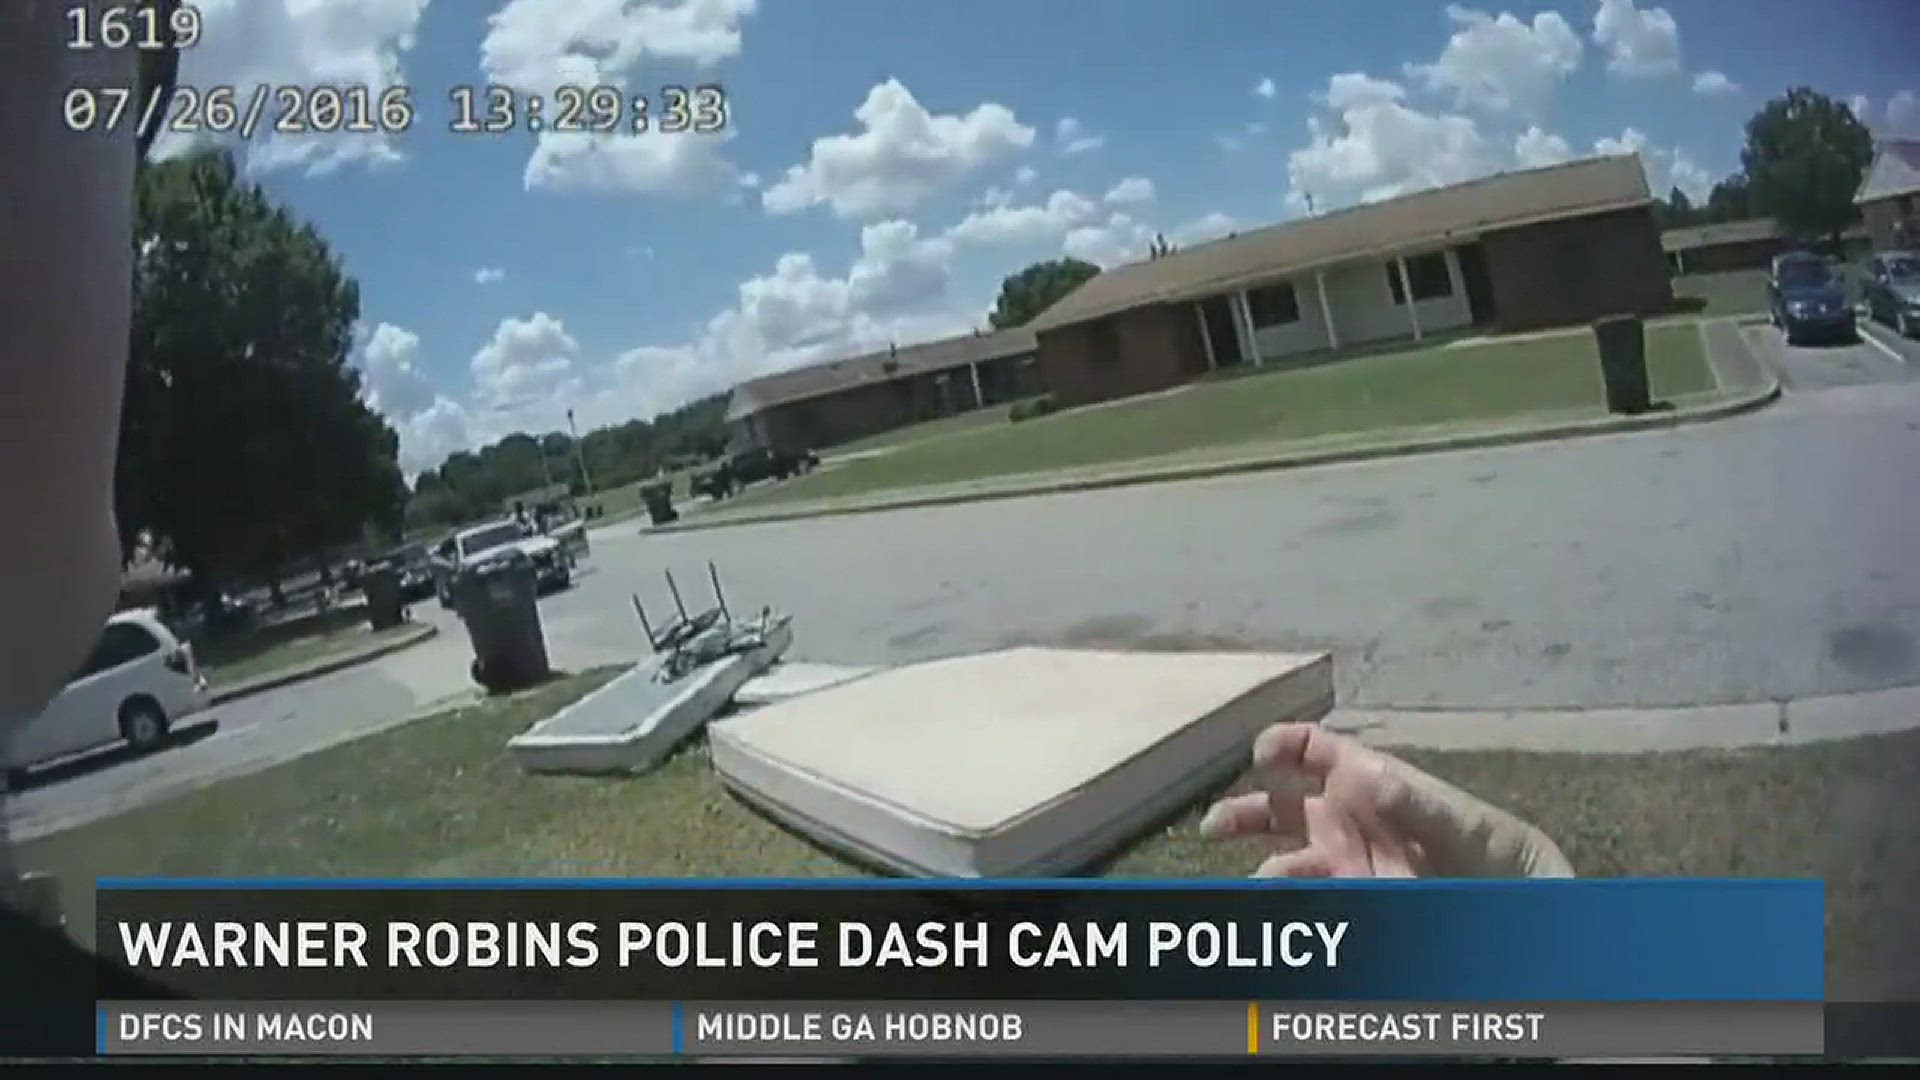 Warner Robins police dashcam policy